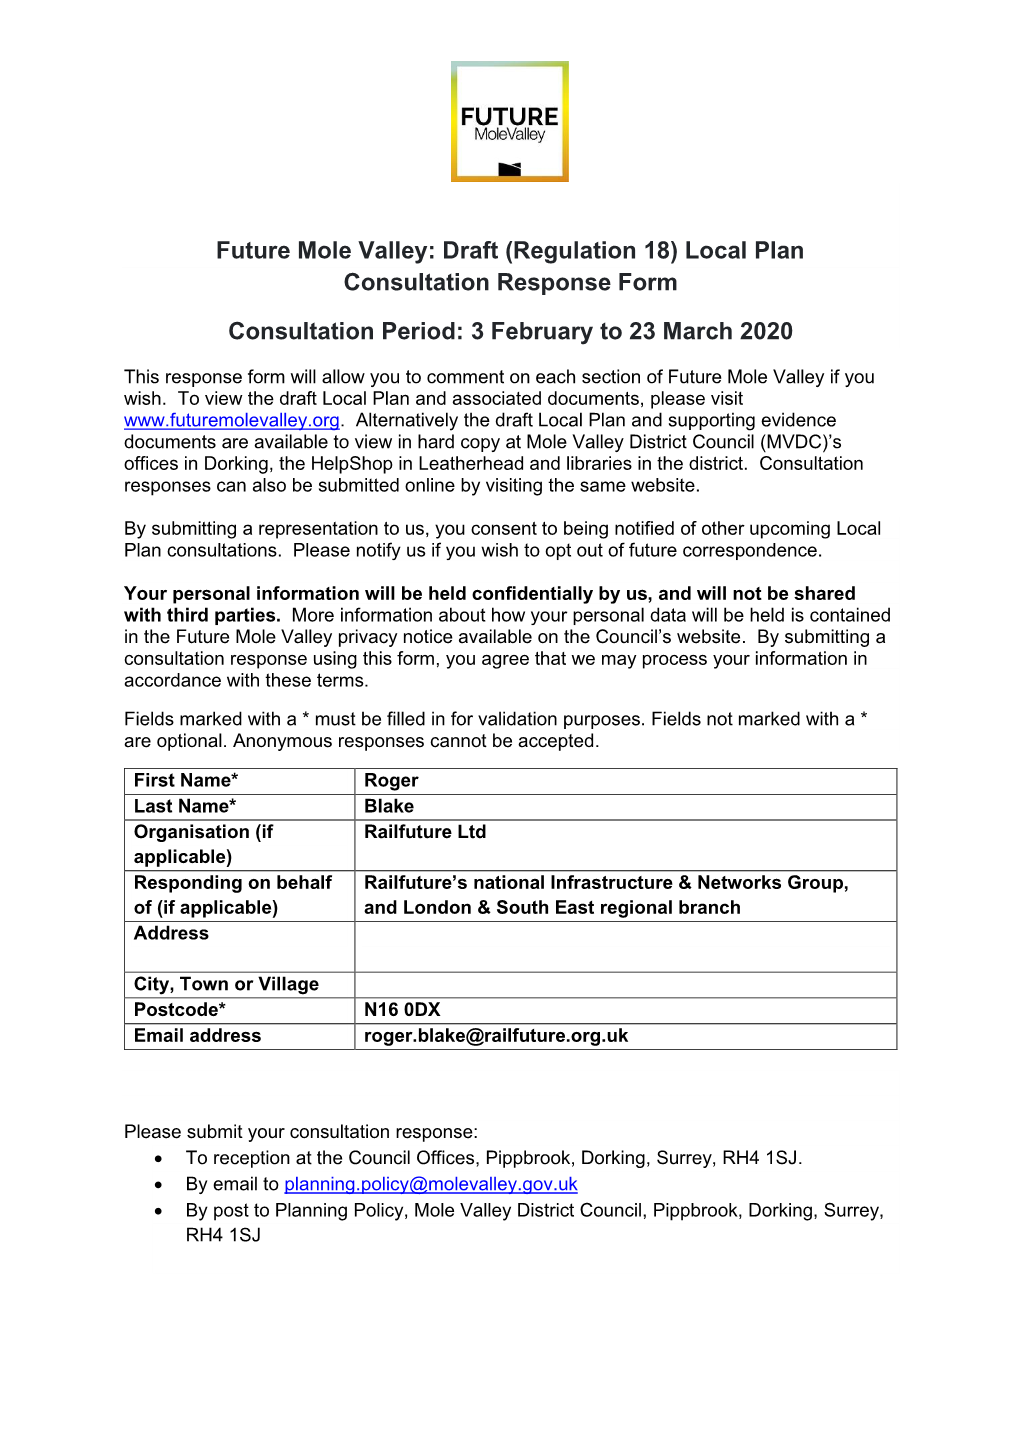 Future Mole Valley: Draft (Regulation 18) Local Plan Consultation Response Form